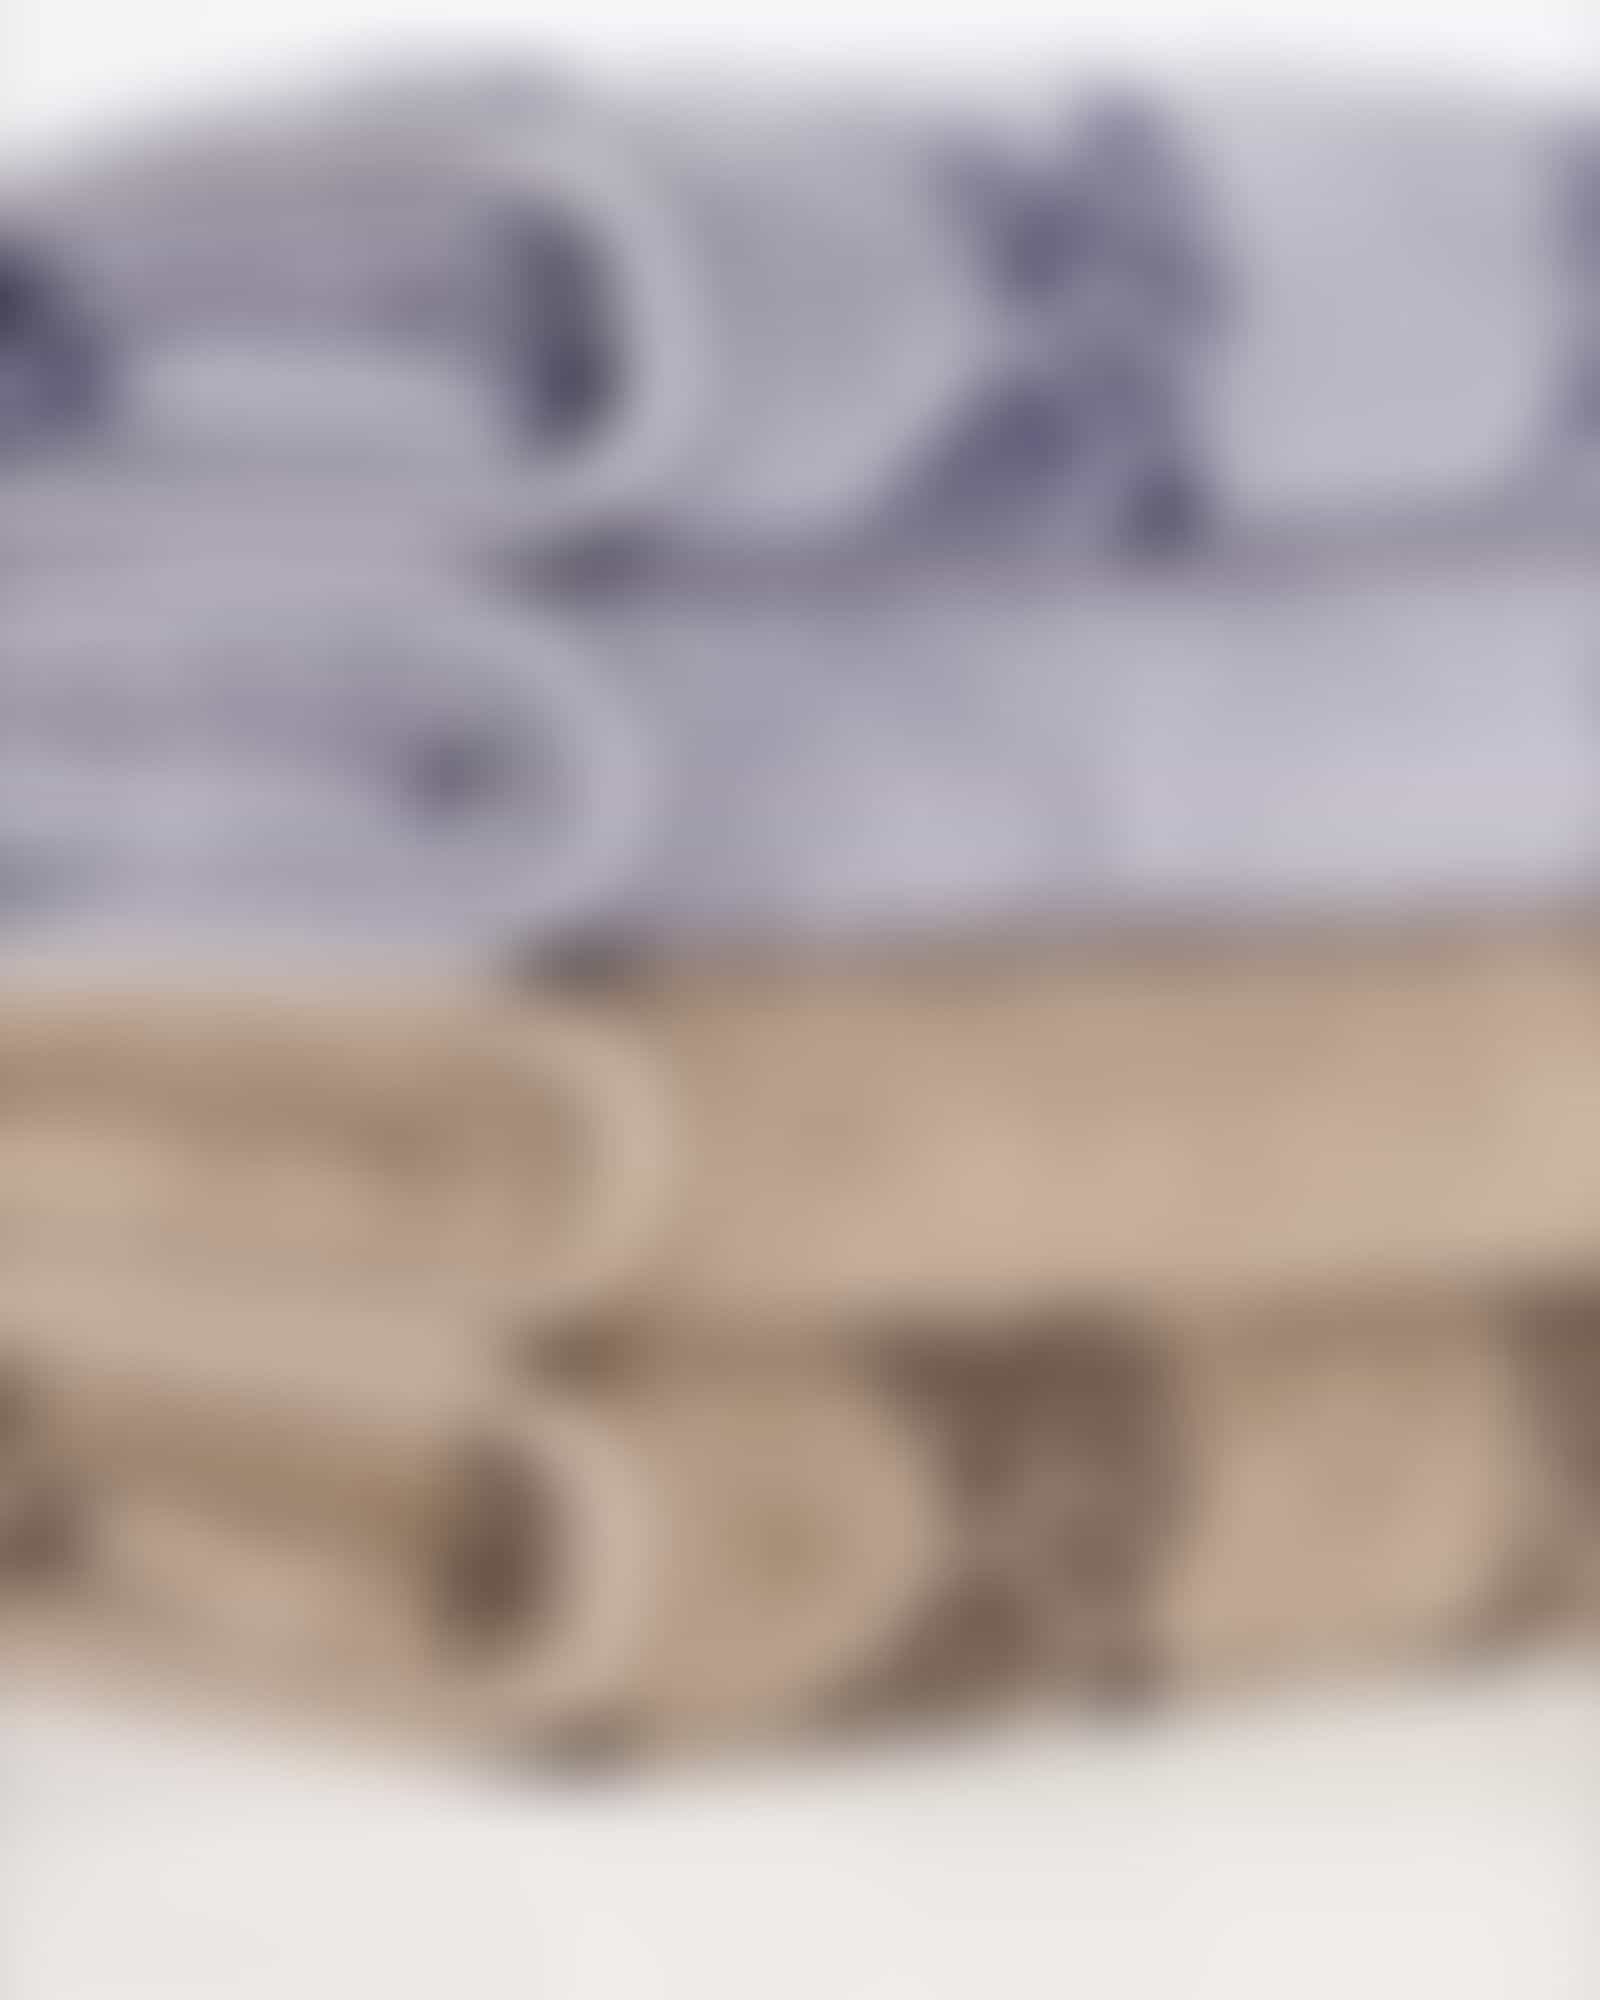 JOOP! Handtücher Classic Cornflower 1611 - Farbe: denim - 19 - Seiflappen 30x30 cm